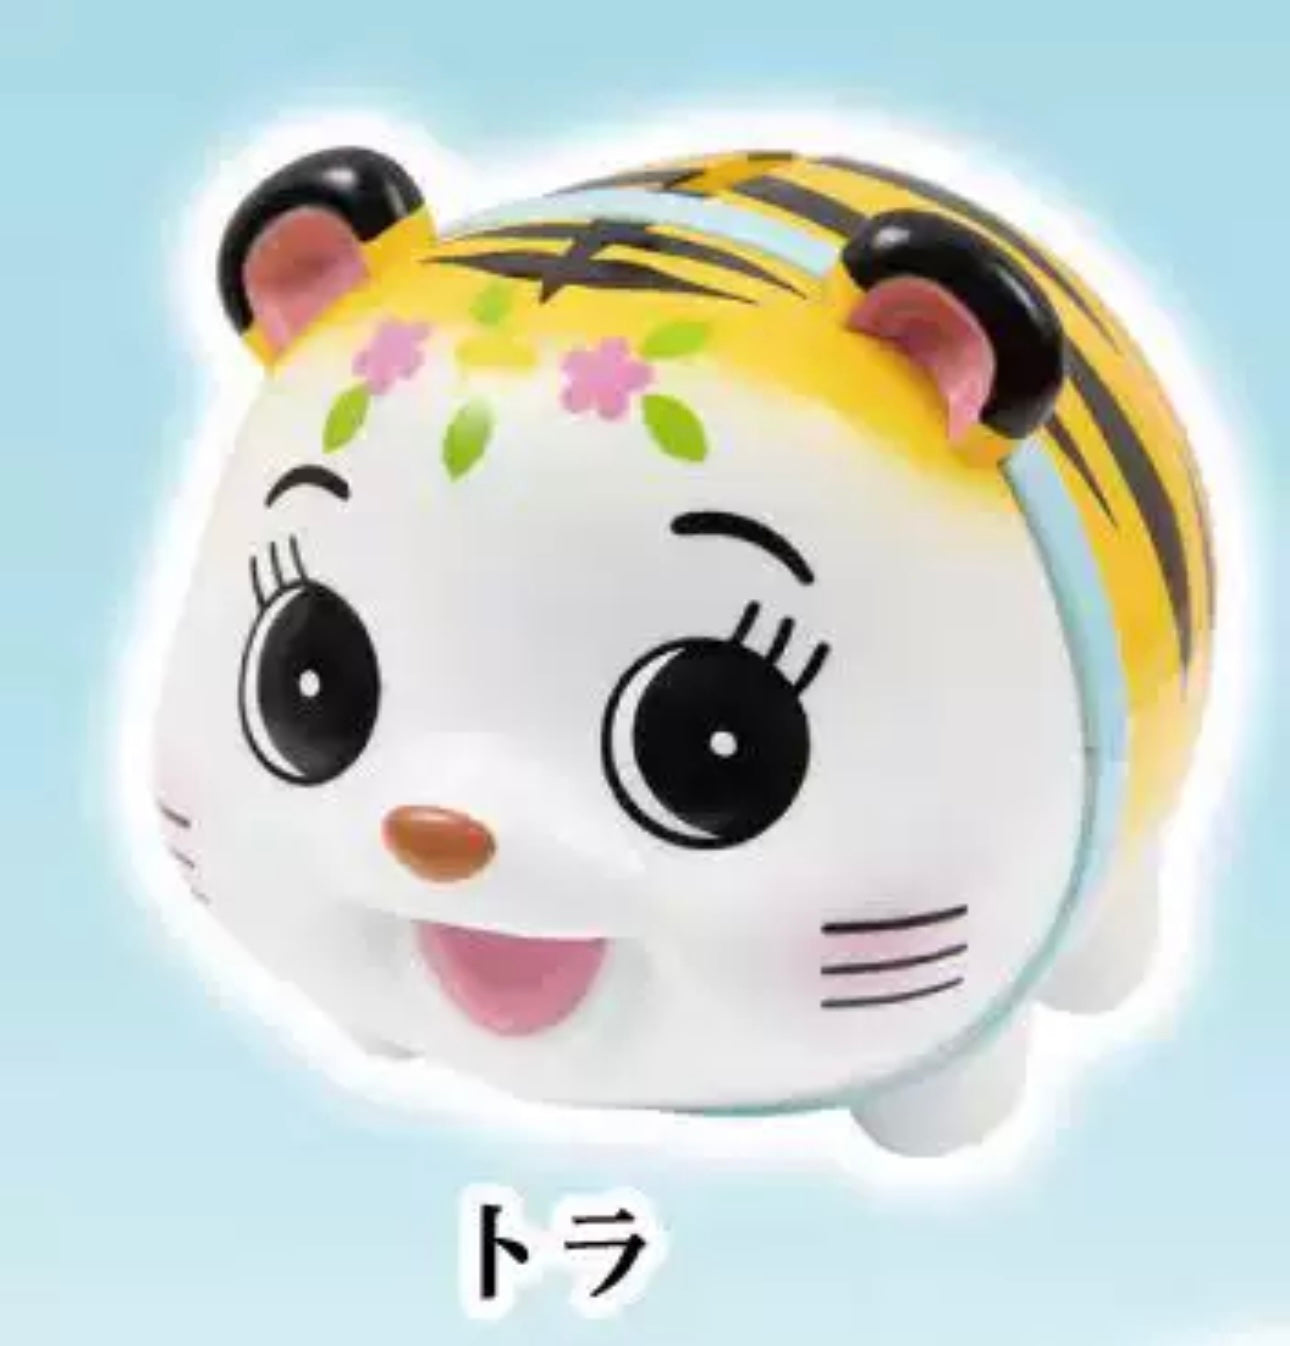 Japan Qualia Gacha Pig Piggy Bank and Its Friends Part 3 | Blue Pig Tiger Mouse Tanuki Sloth - Showa Retro Vintge Style Mini Coin Bank